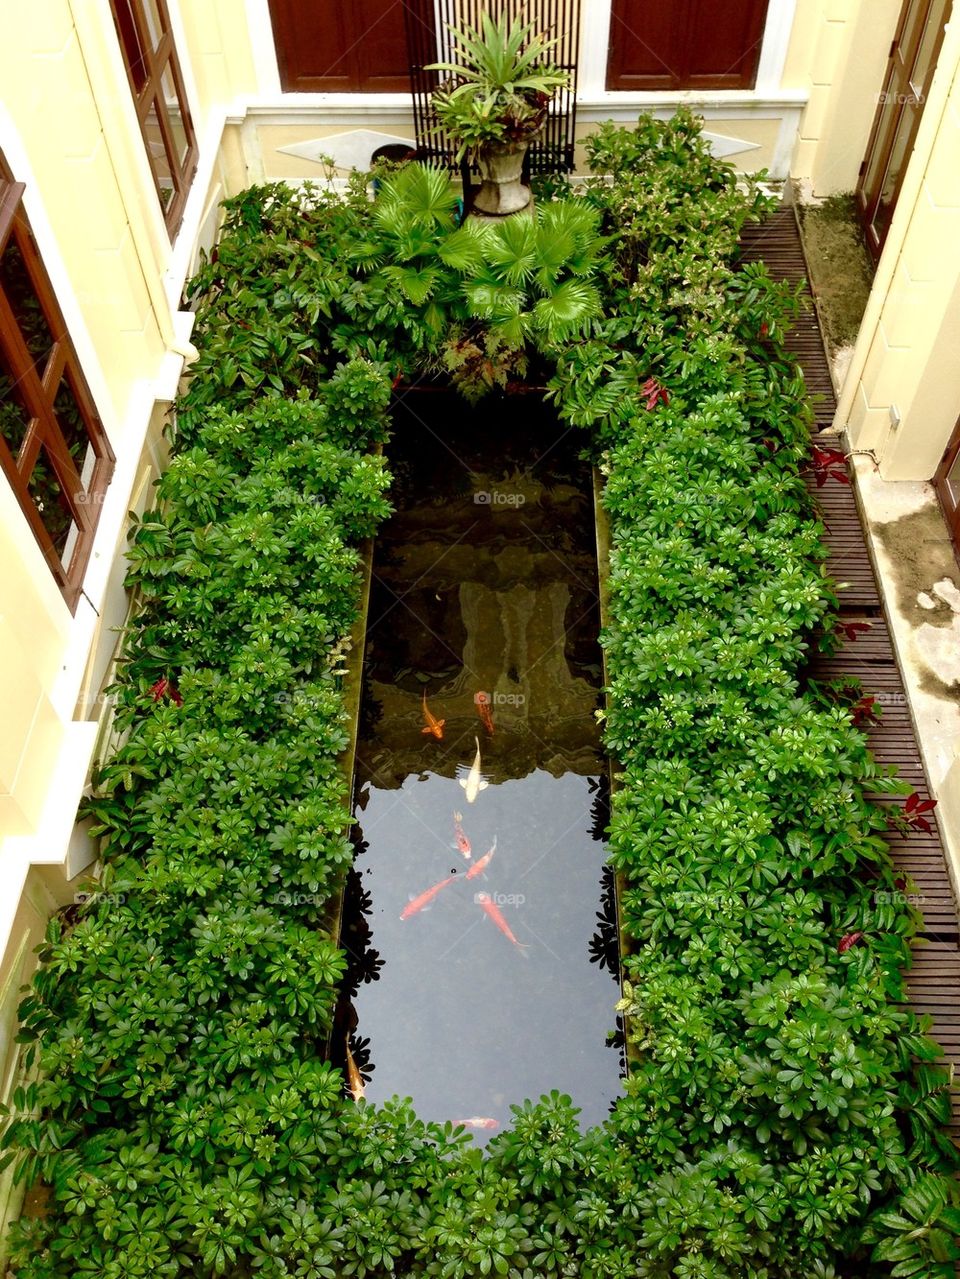 fish pond and garden in courtyard